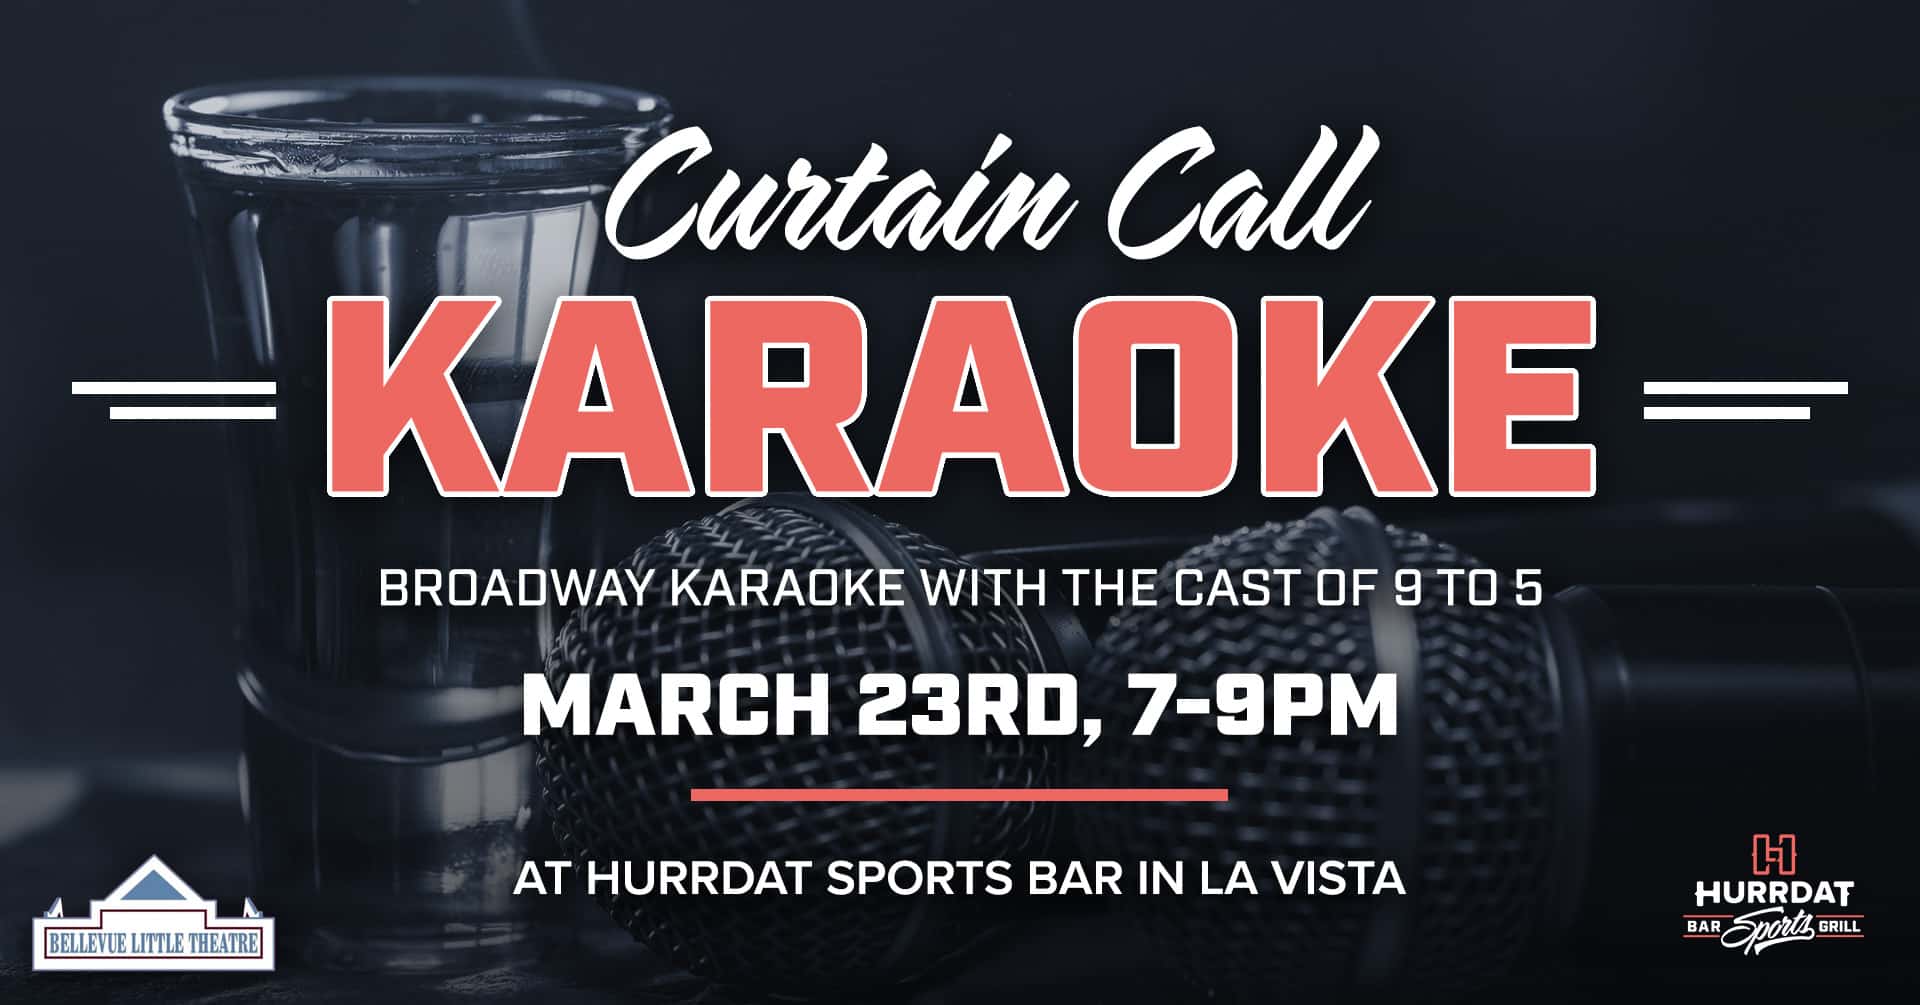 Curtain Call Karaoke Broadway Style